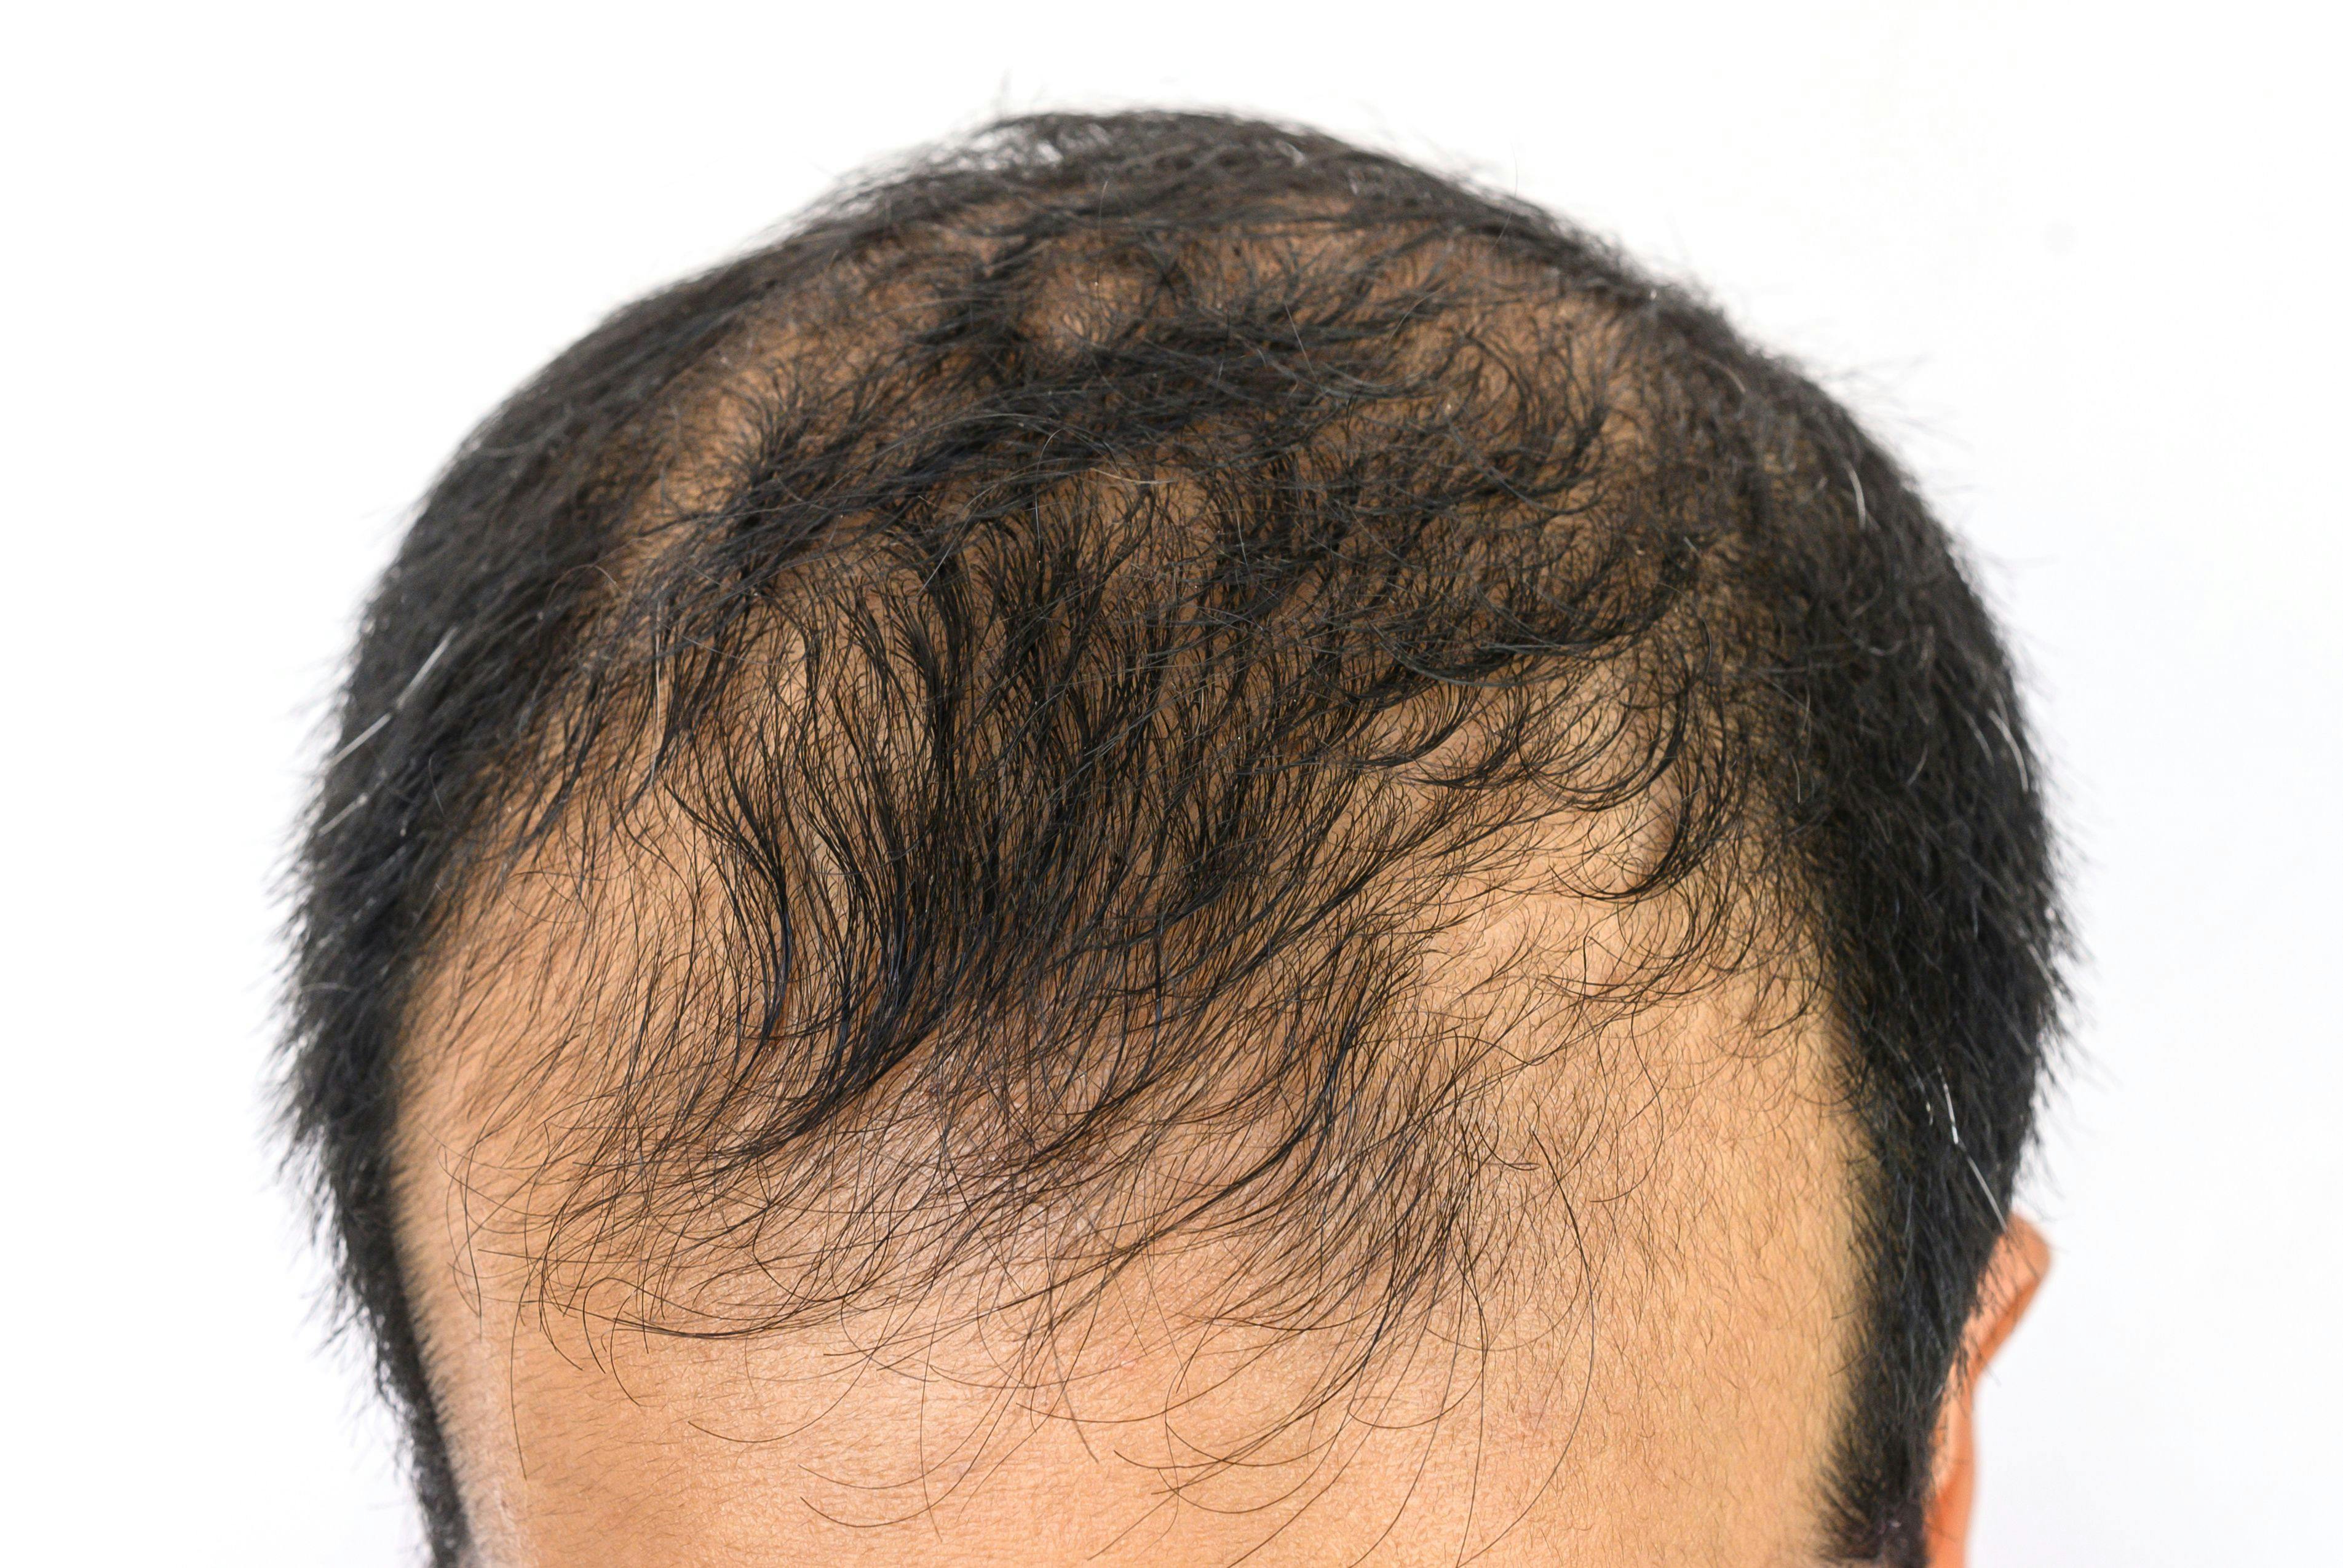 Male pattern baldness. | Image Credit: boyloso - stock.adobe.com